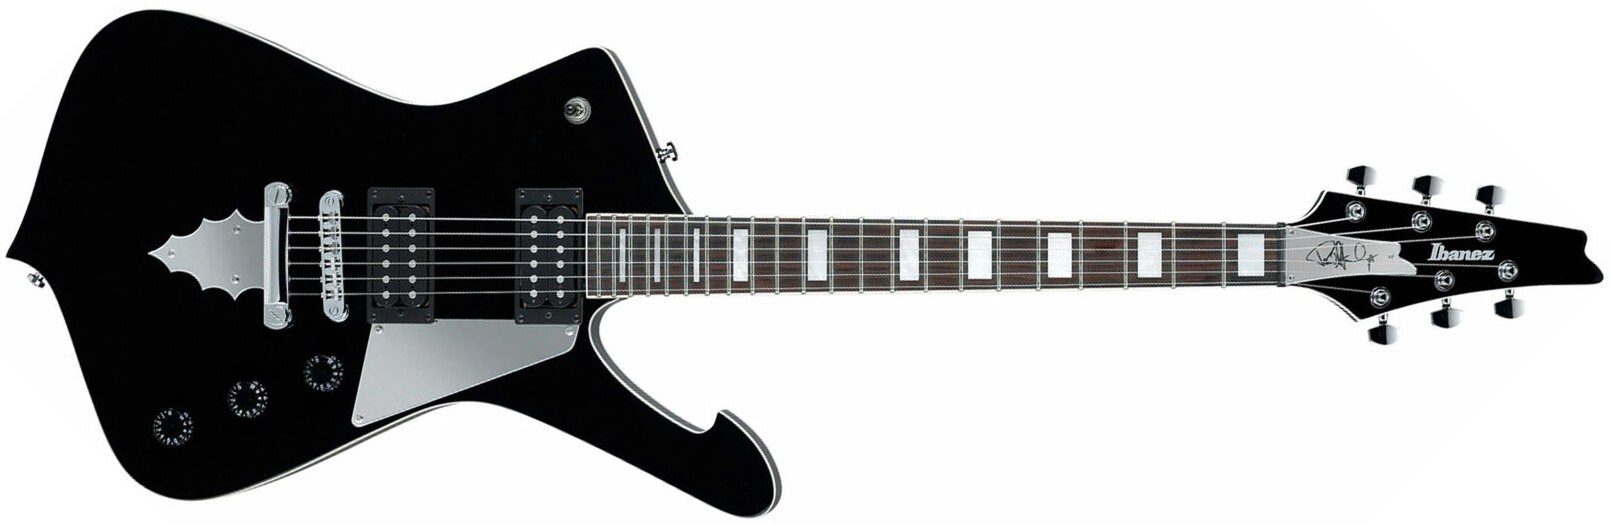 Ibanez Paul Stanley Ps60 Bk Signature Hh Ht Pur - Black - Metal electric guitar - Main picture